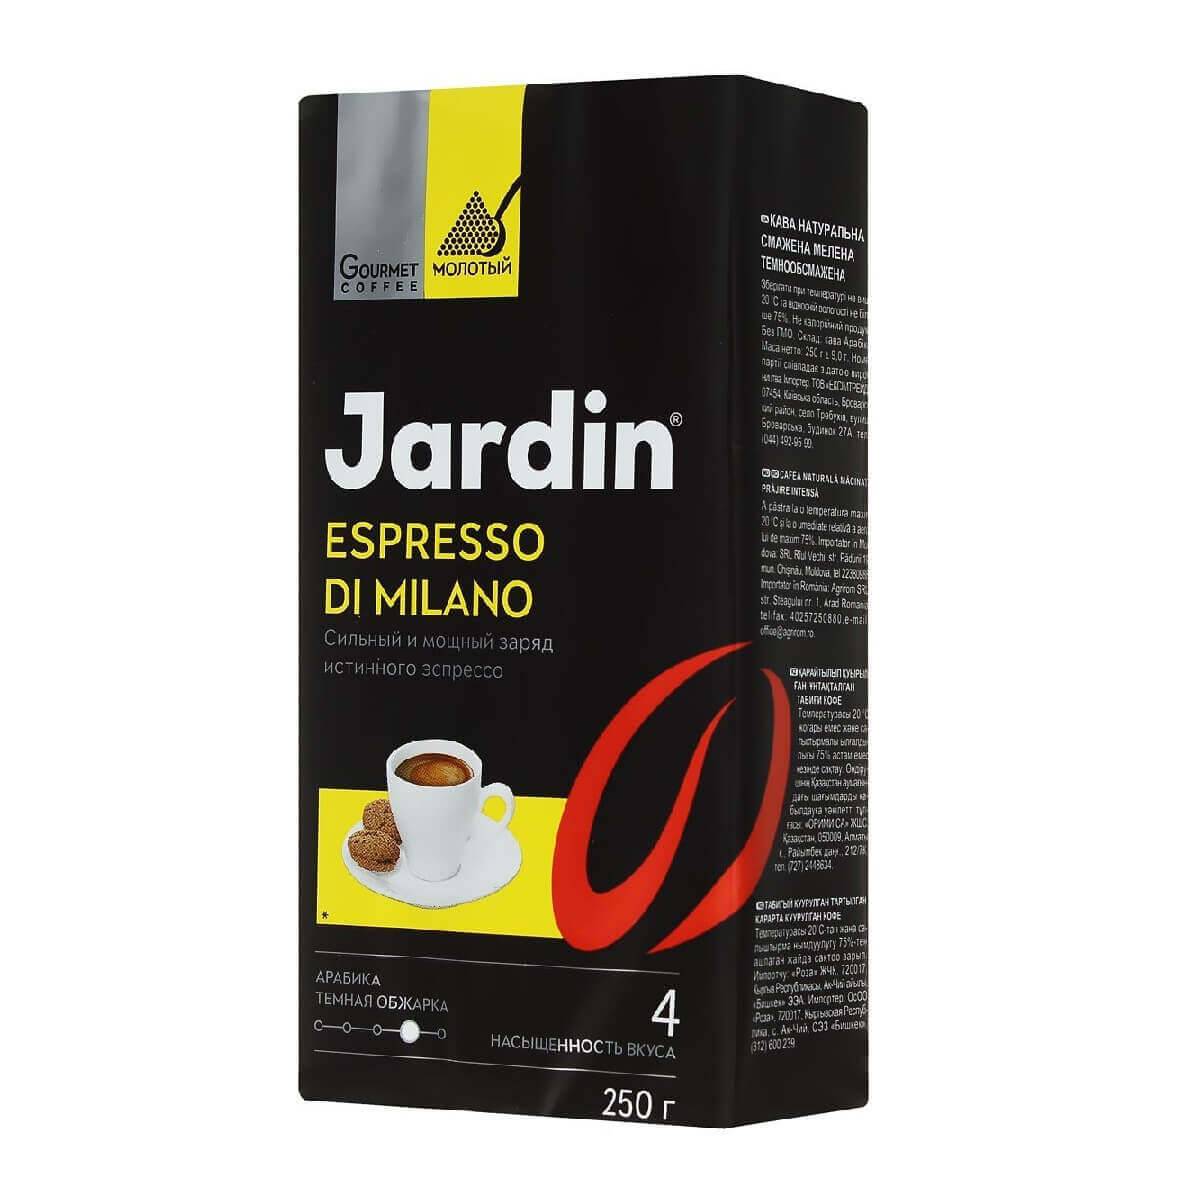 Ассортимент кофе Jardin